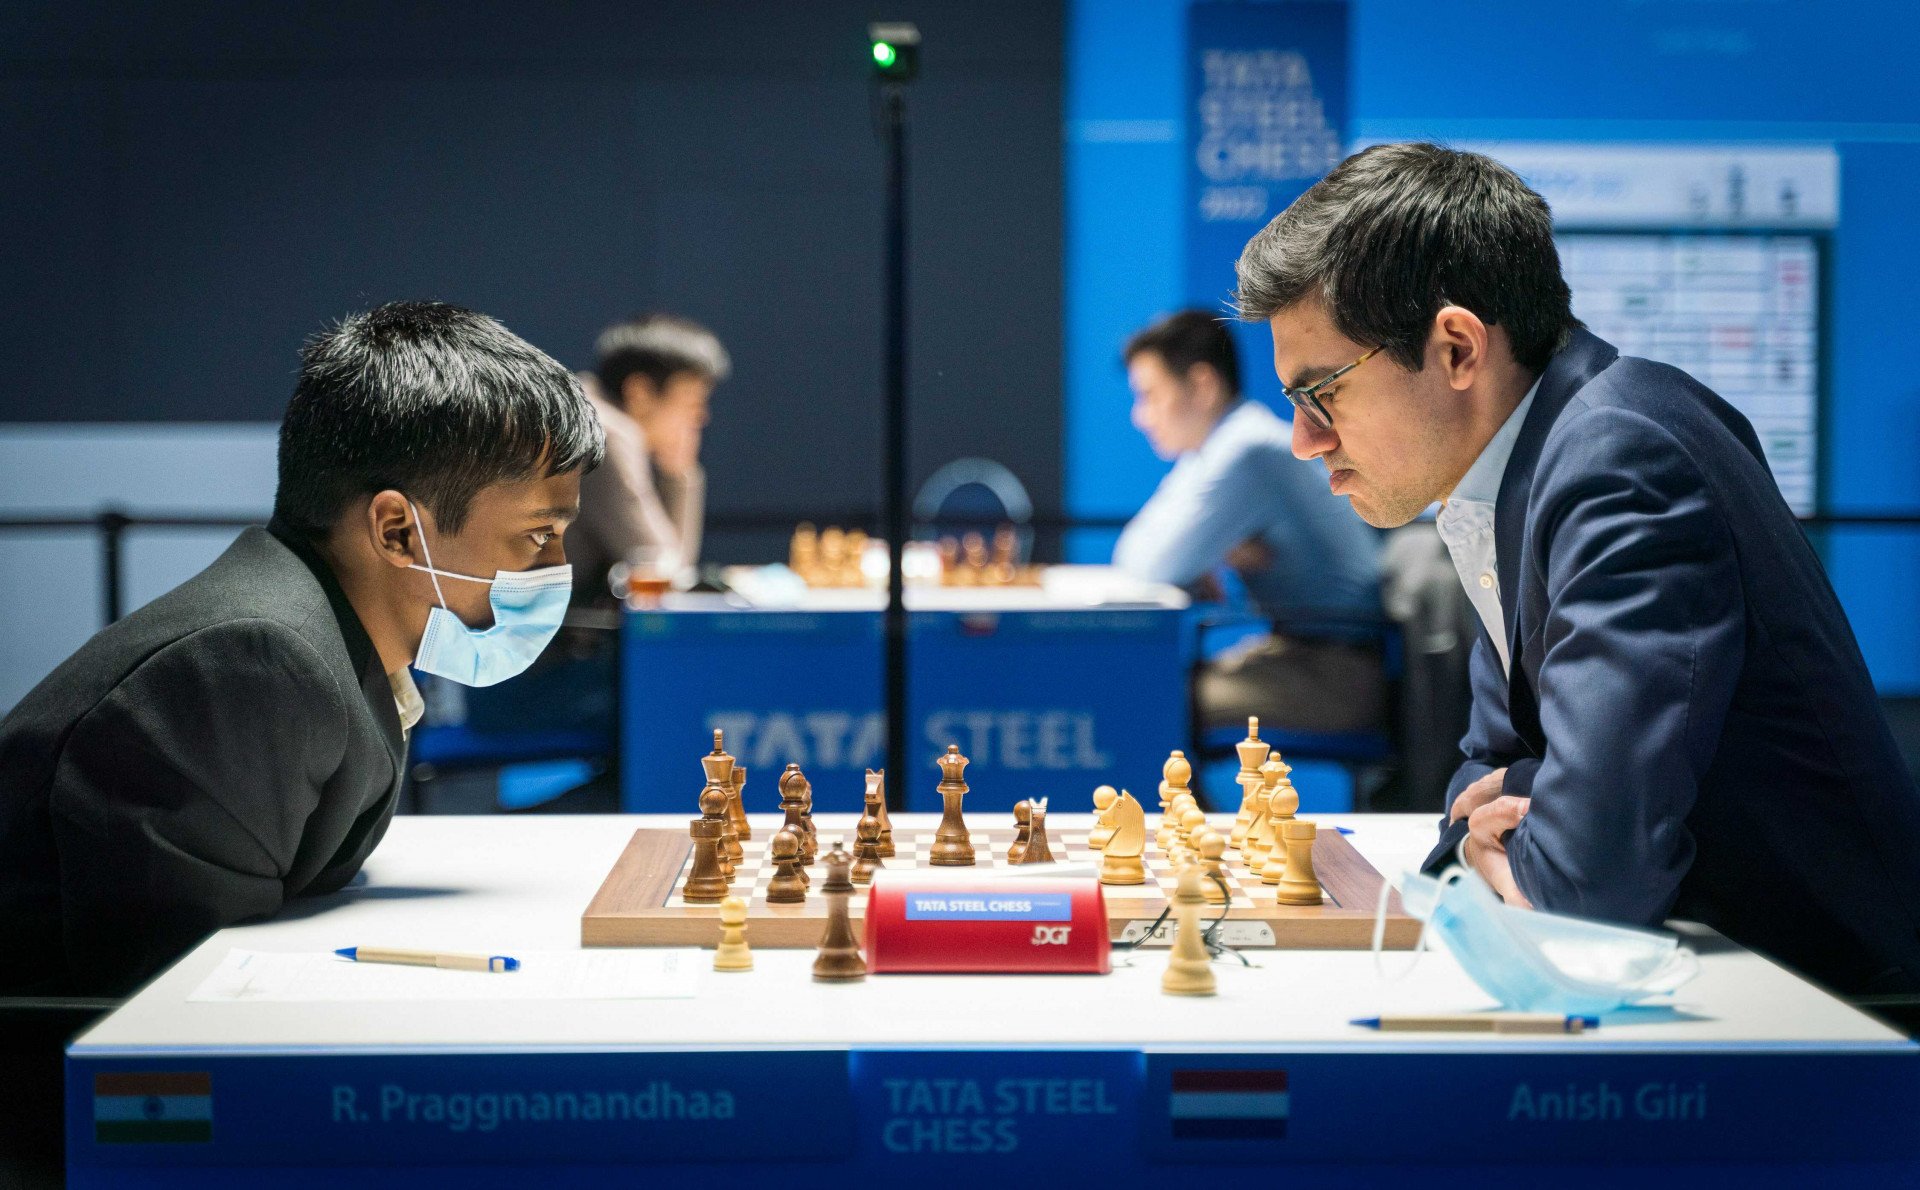 Chessable Masters Tournament